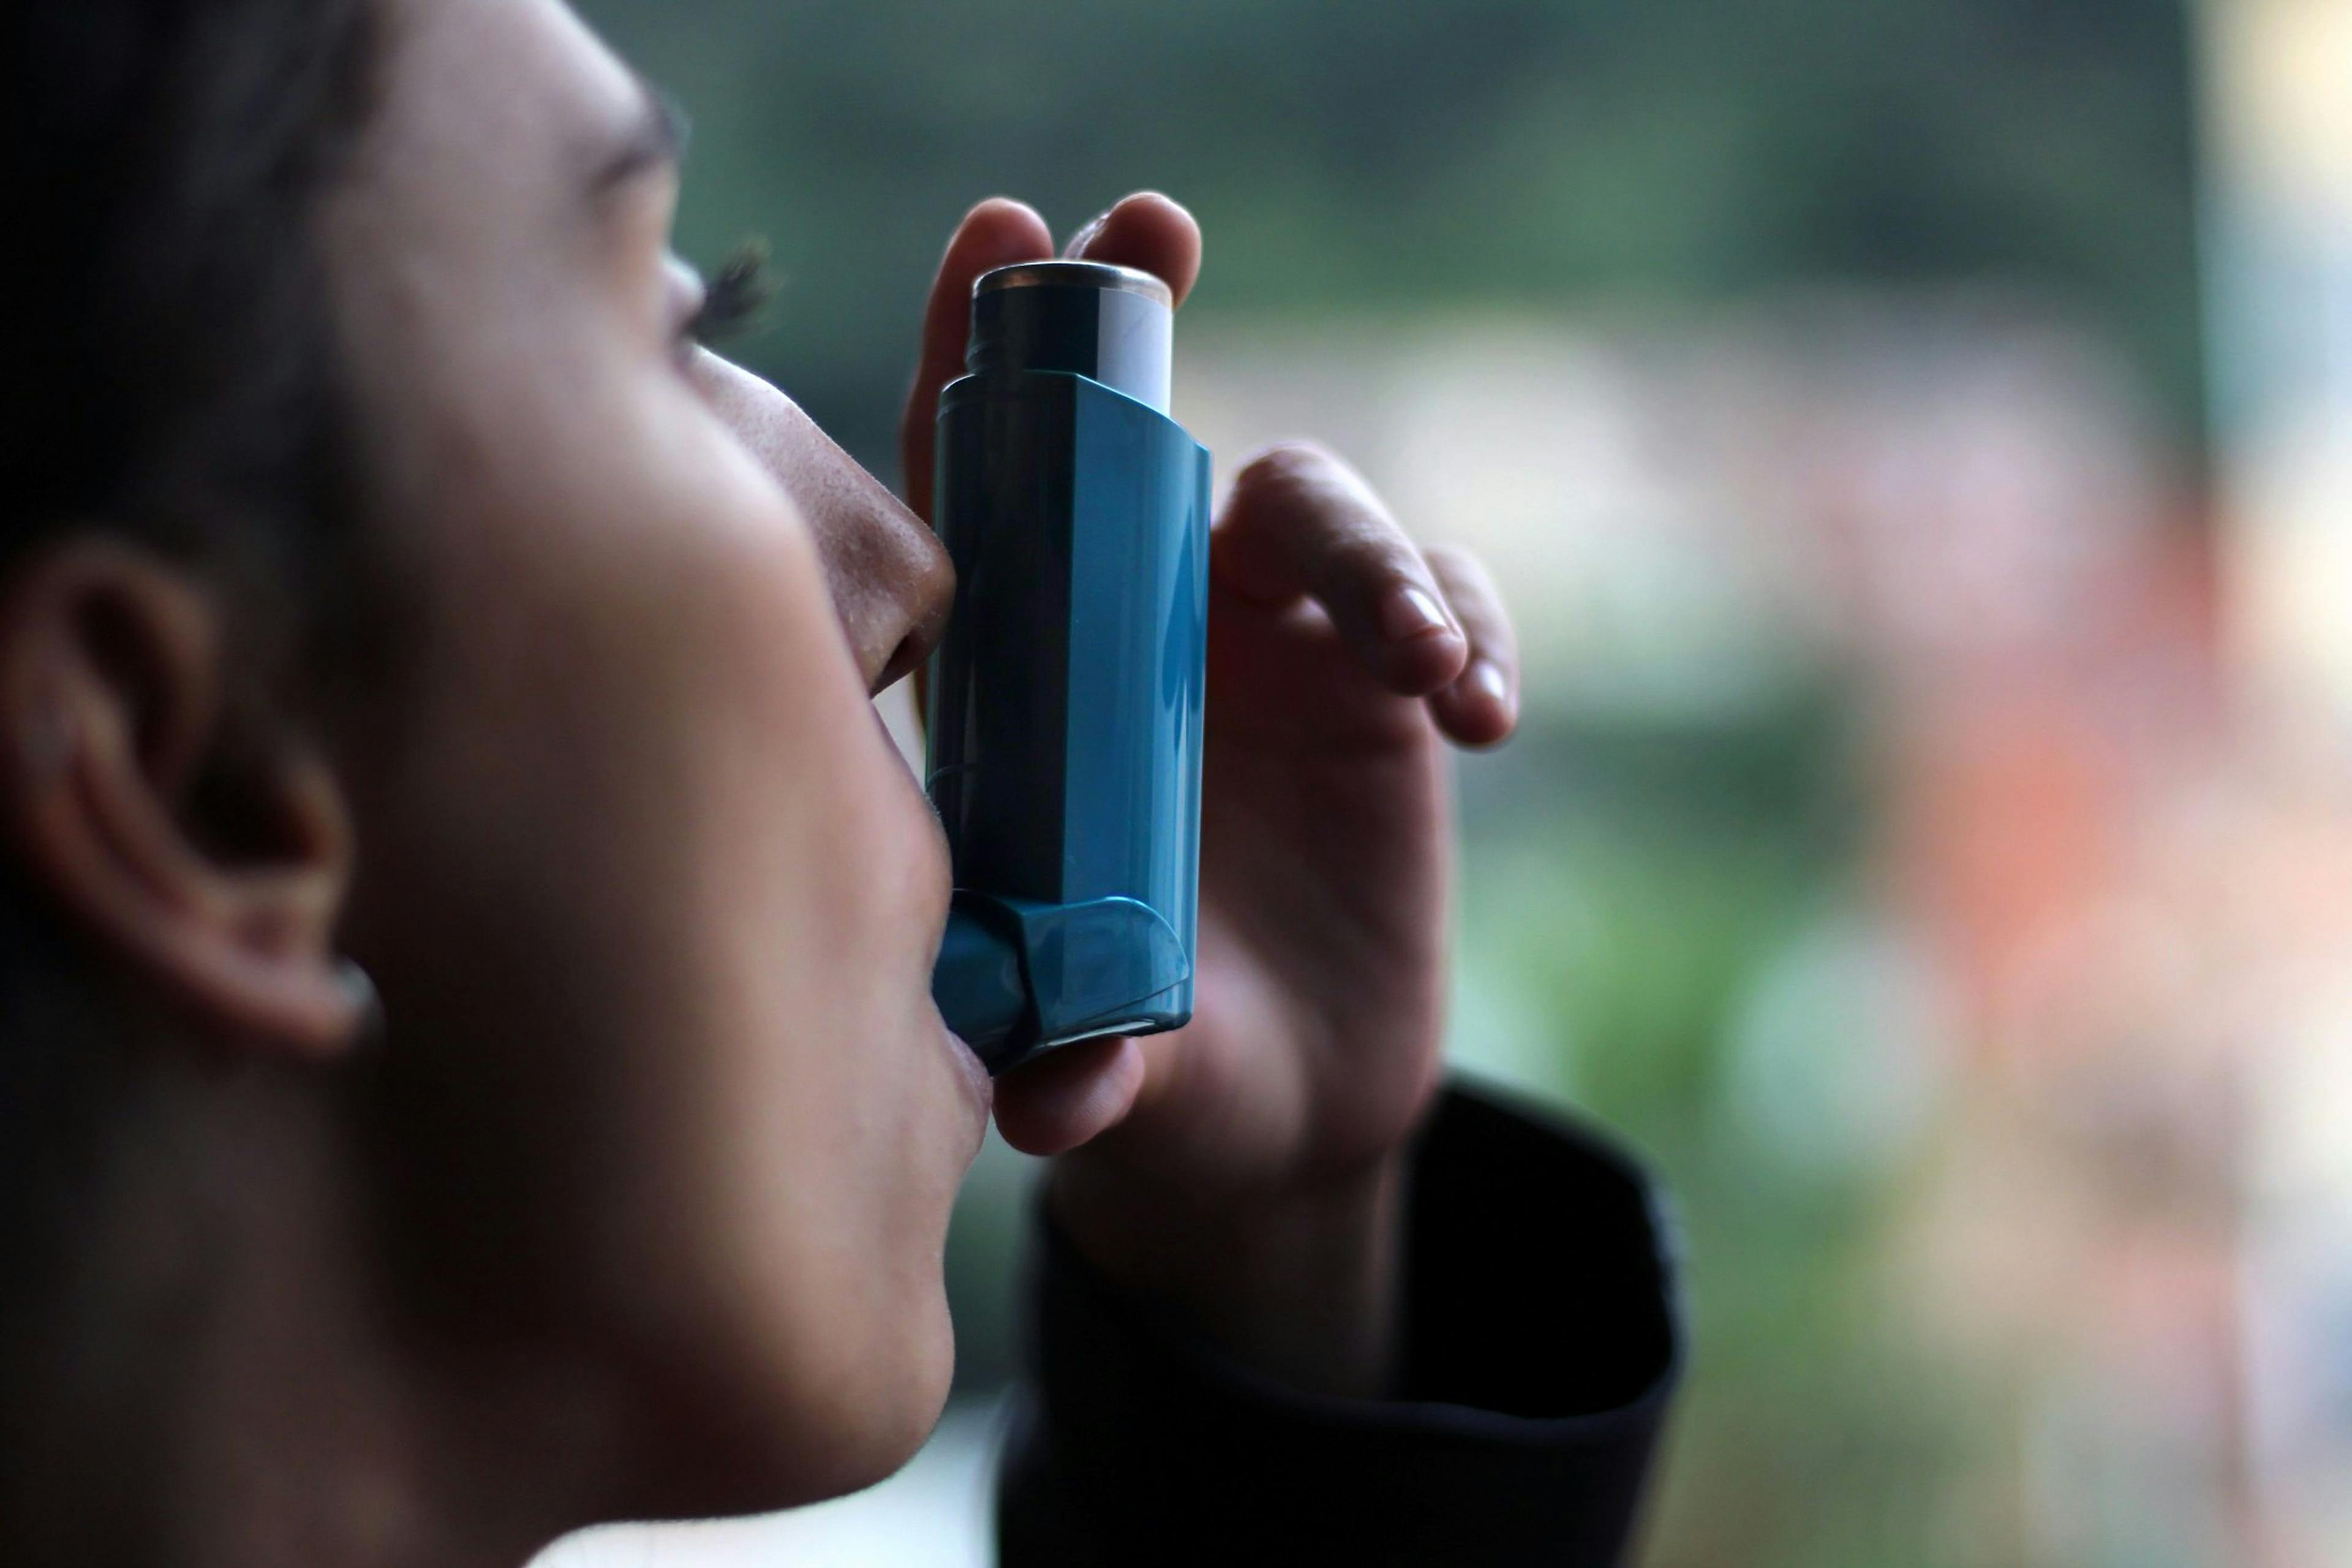 Patient using an inhaler | Image Credit: DALU11 - stock.adobe.com